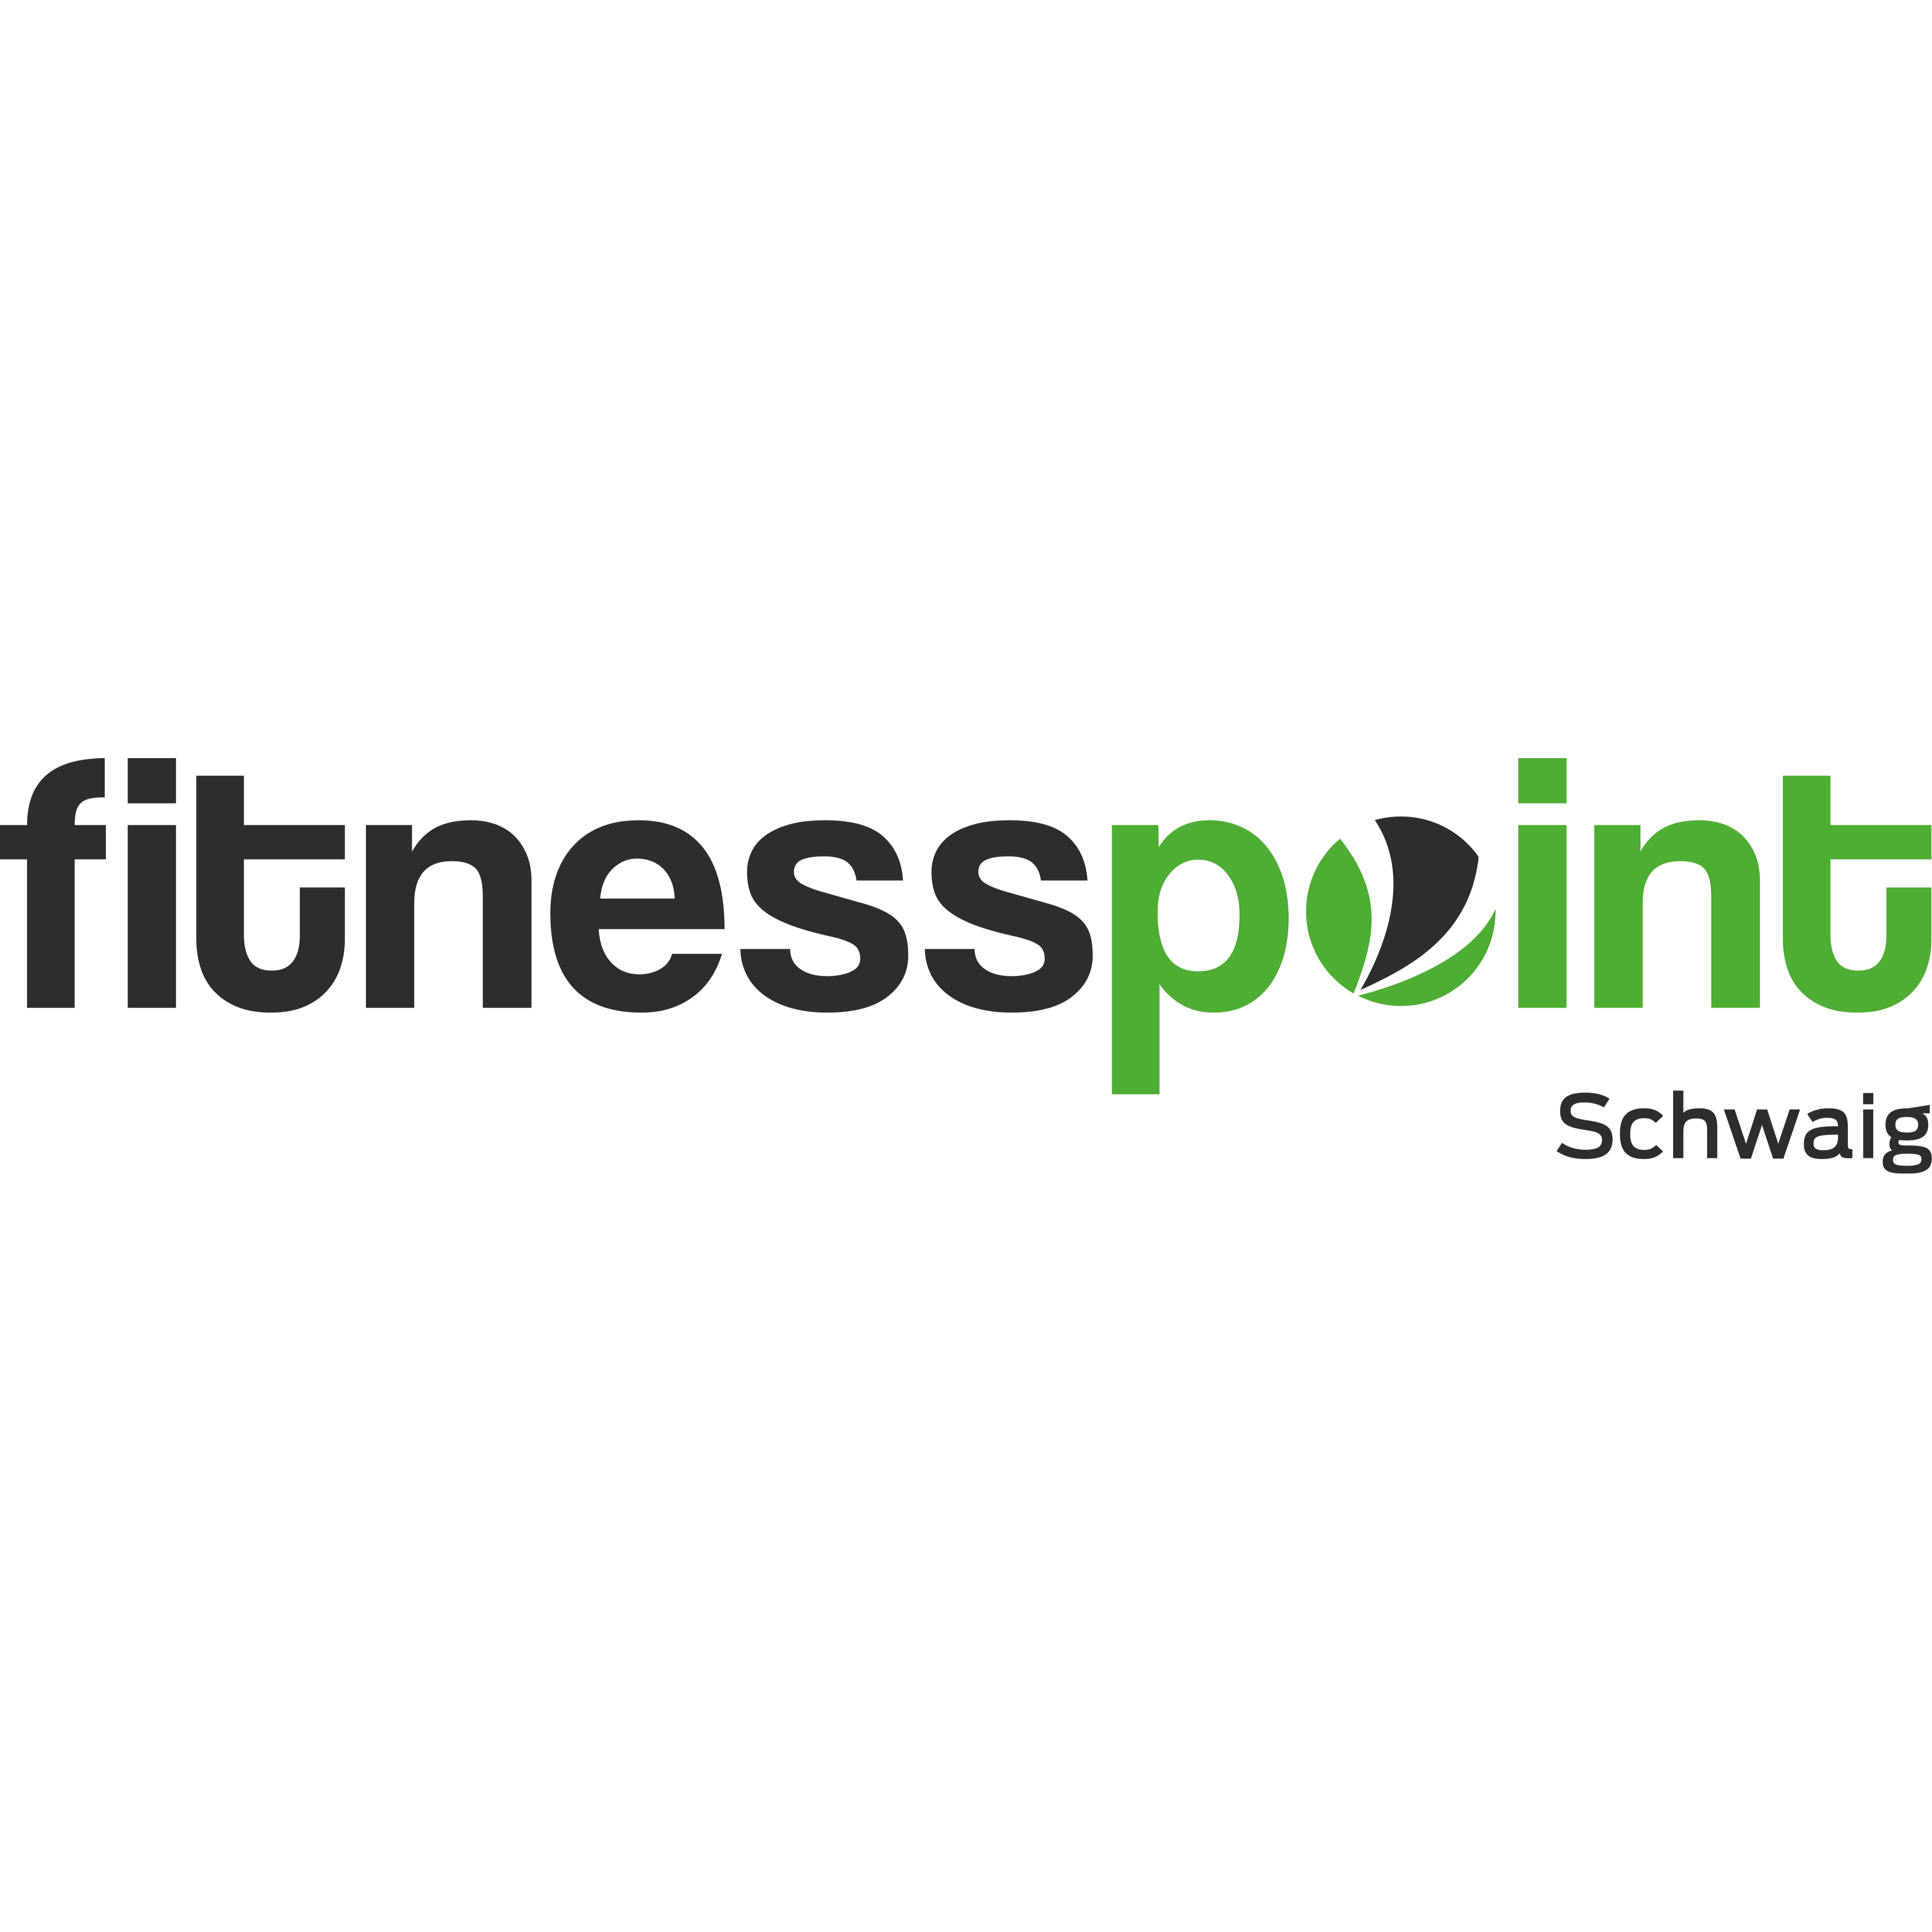 Fitnesspoint Schwaig in Schwaig bei Nürnberg - Logo